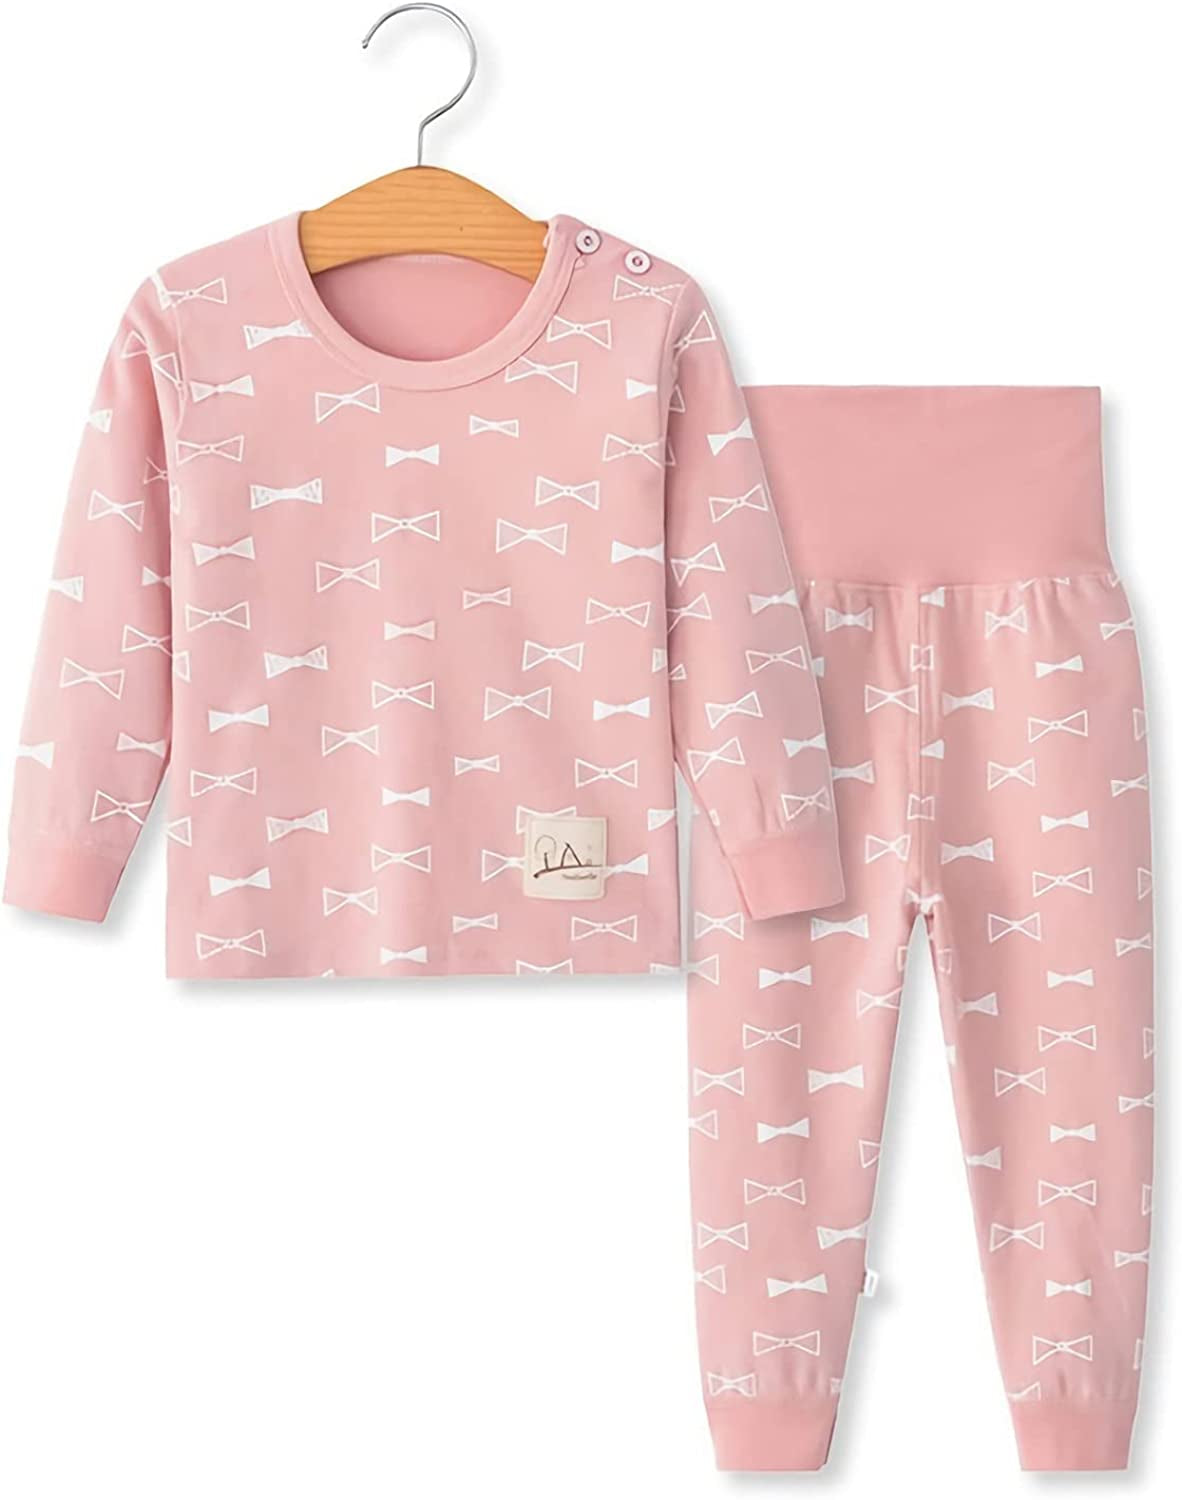 100% Organic Cotton Baby Boys Girls Pajamas Set Long Sleeve Sleepwear